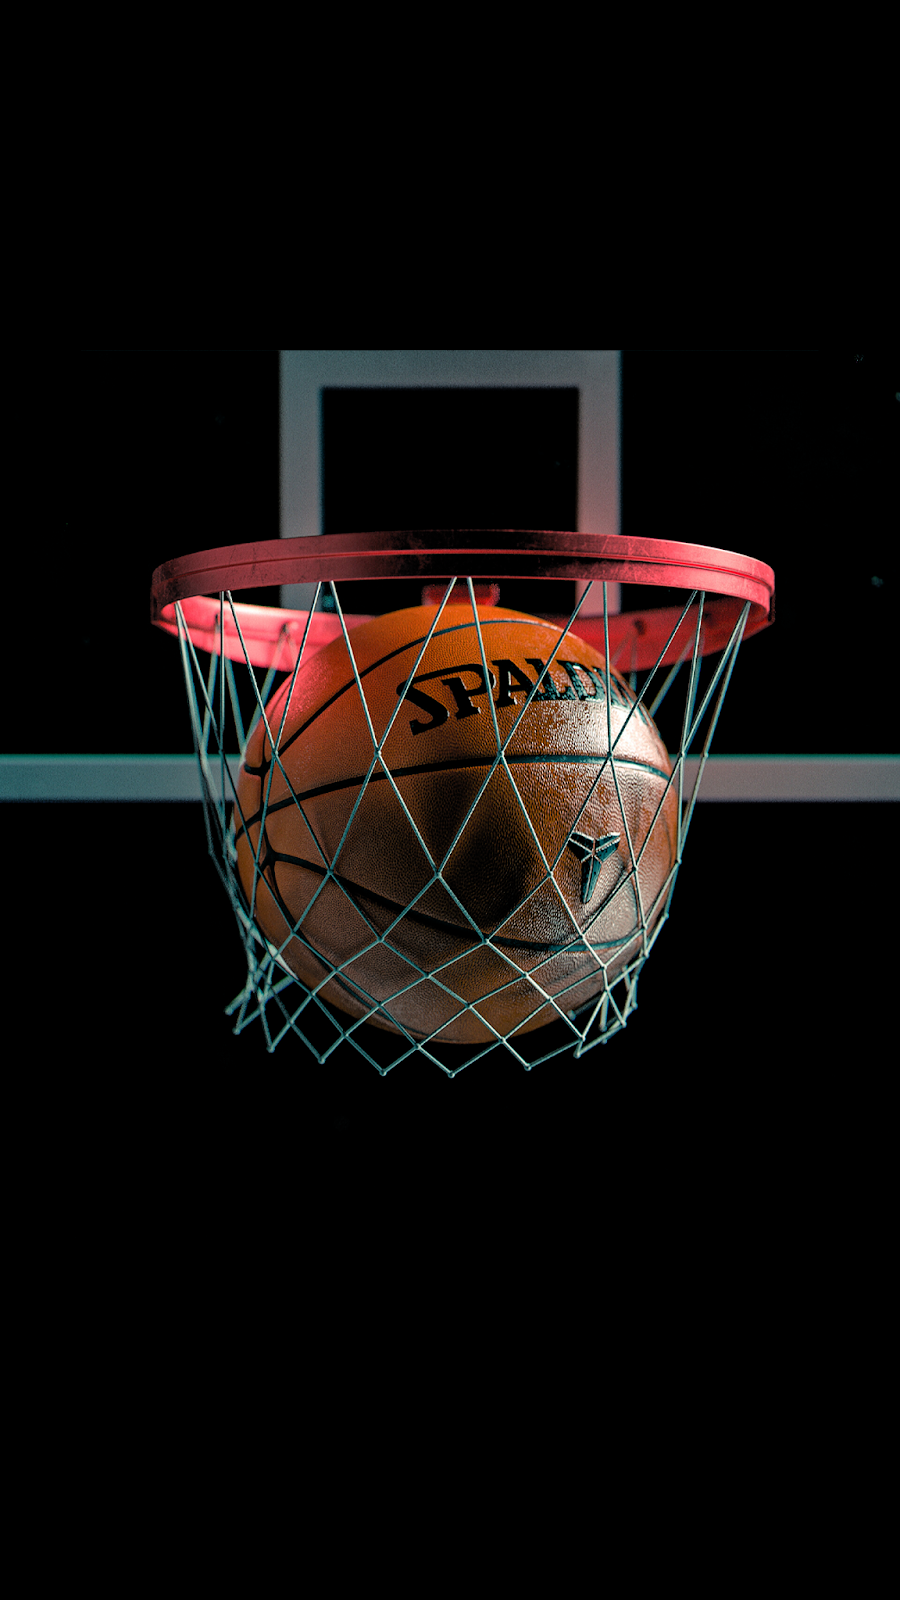 Kobe basket amoled wallpapers for mobile in 2020